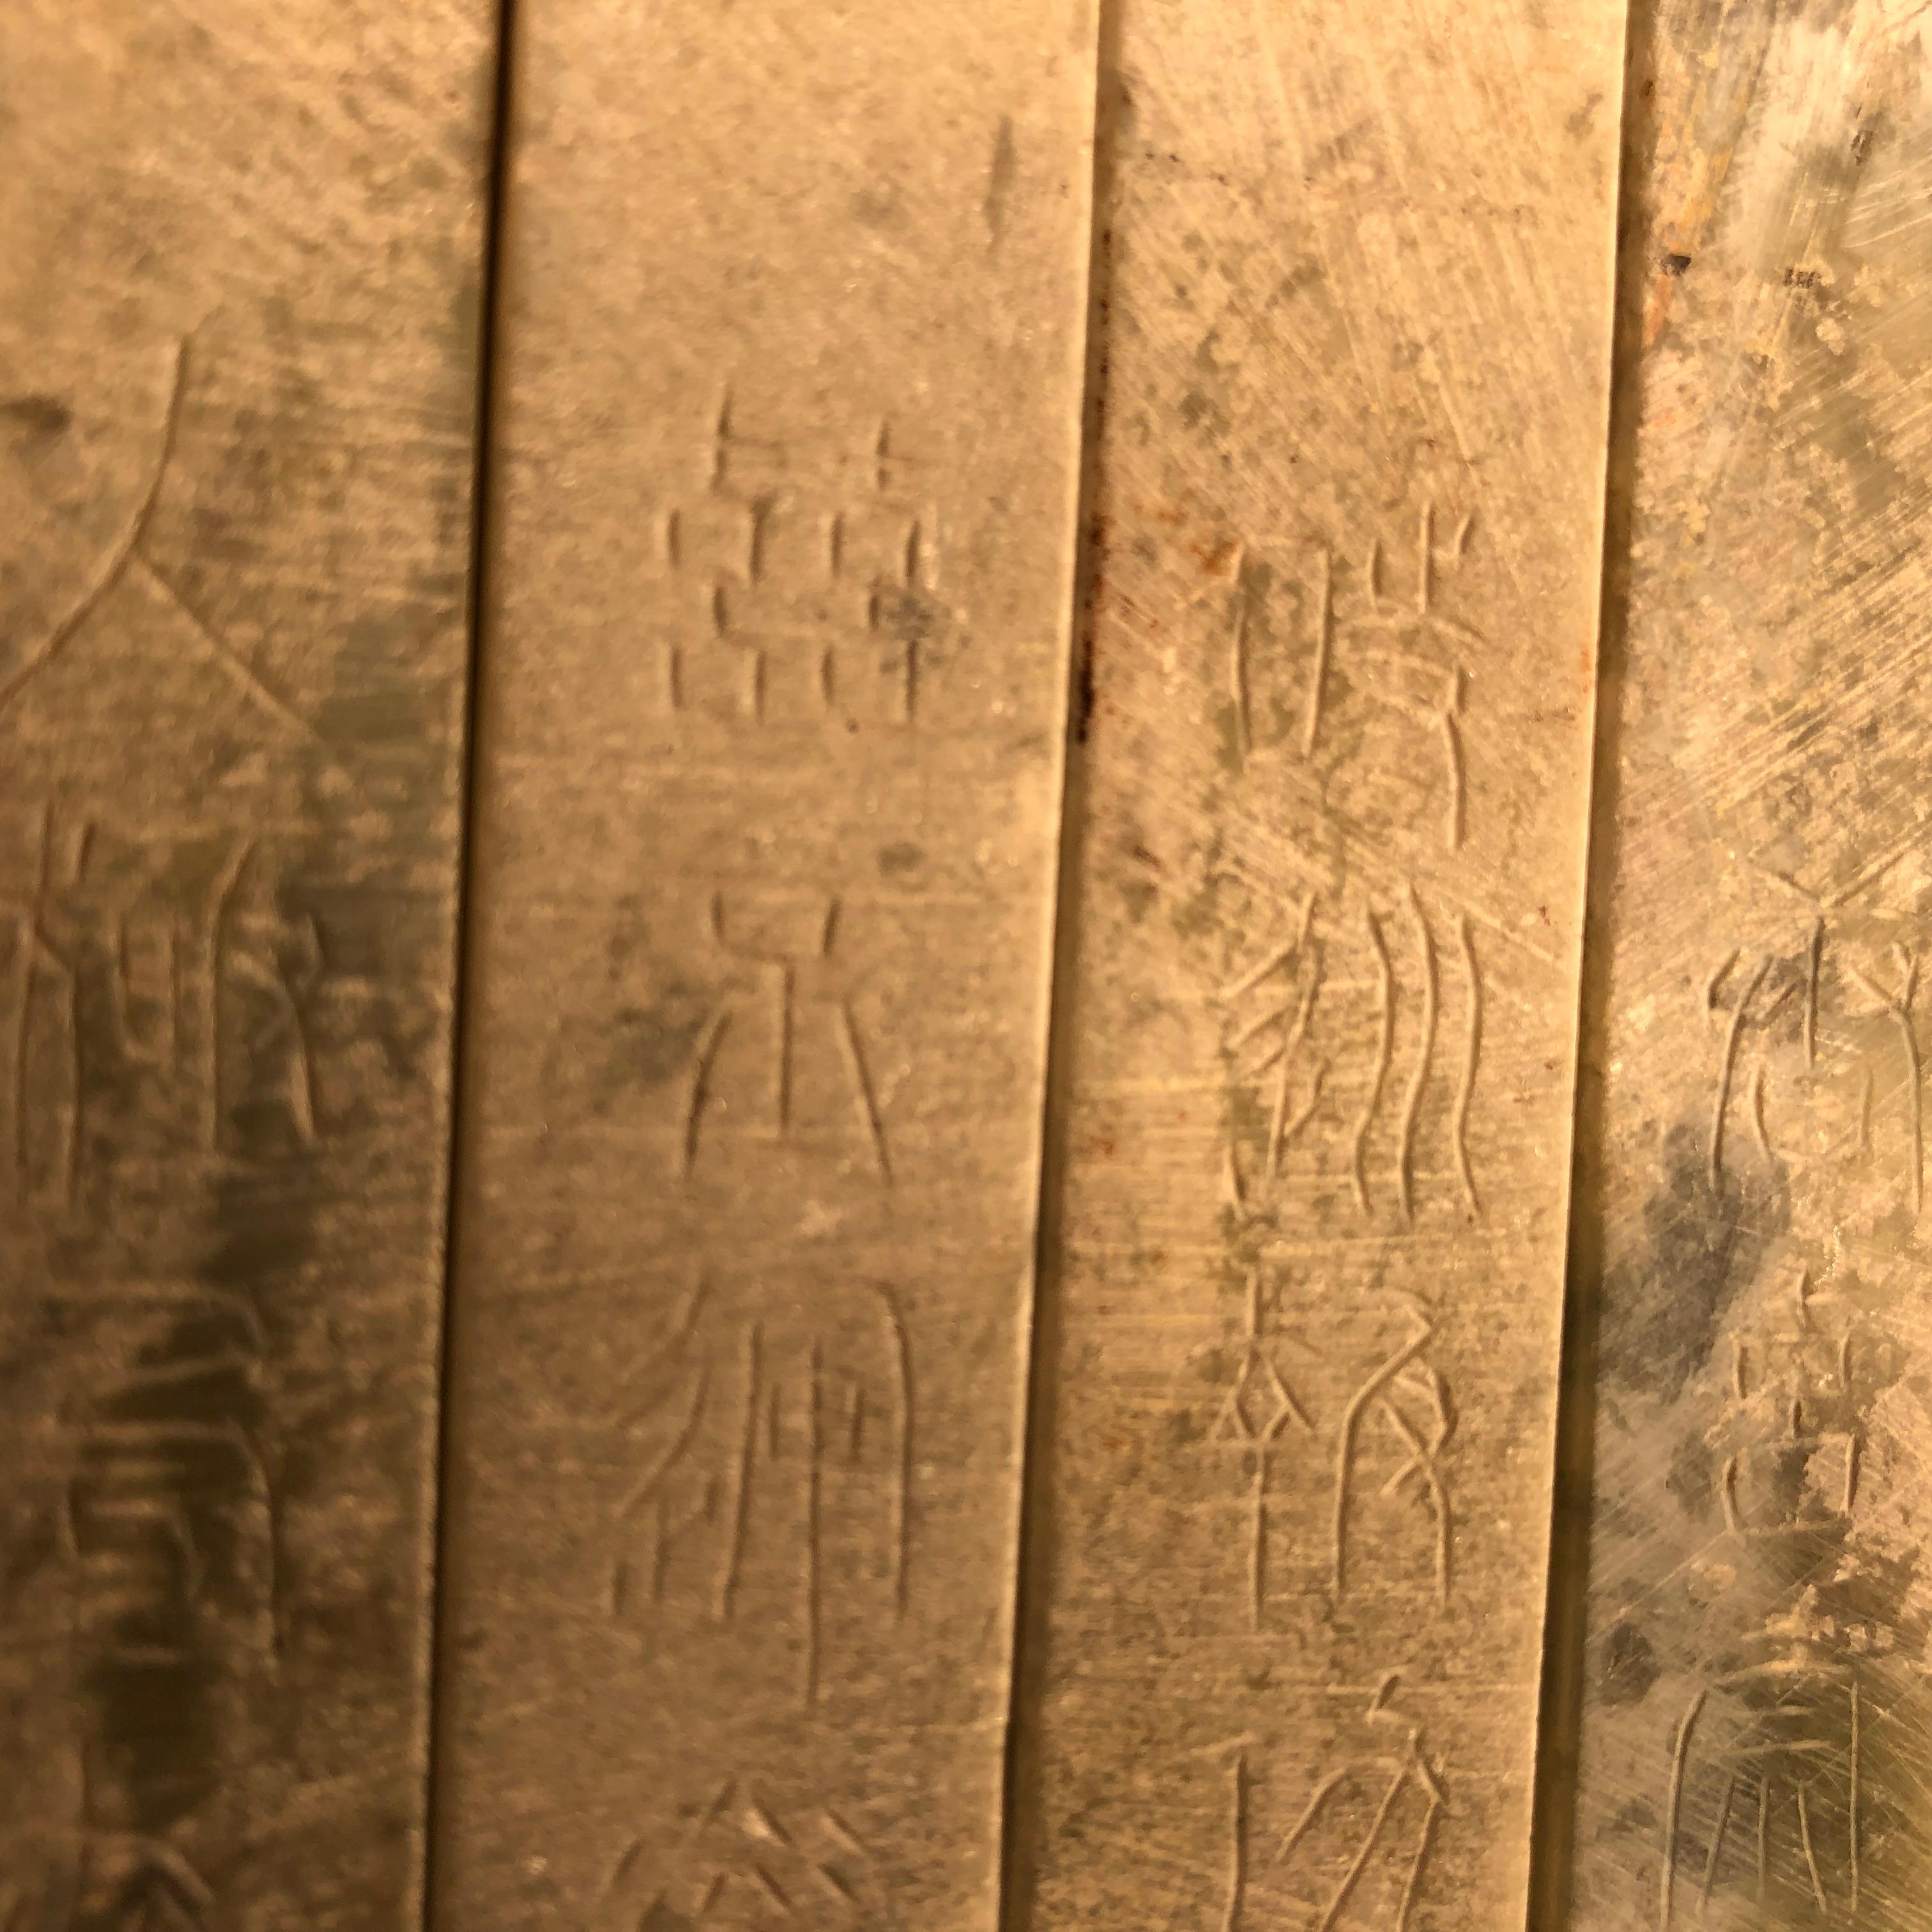 China Ancient Jade Set Four Engraved Tablets, 475-221 BC 4